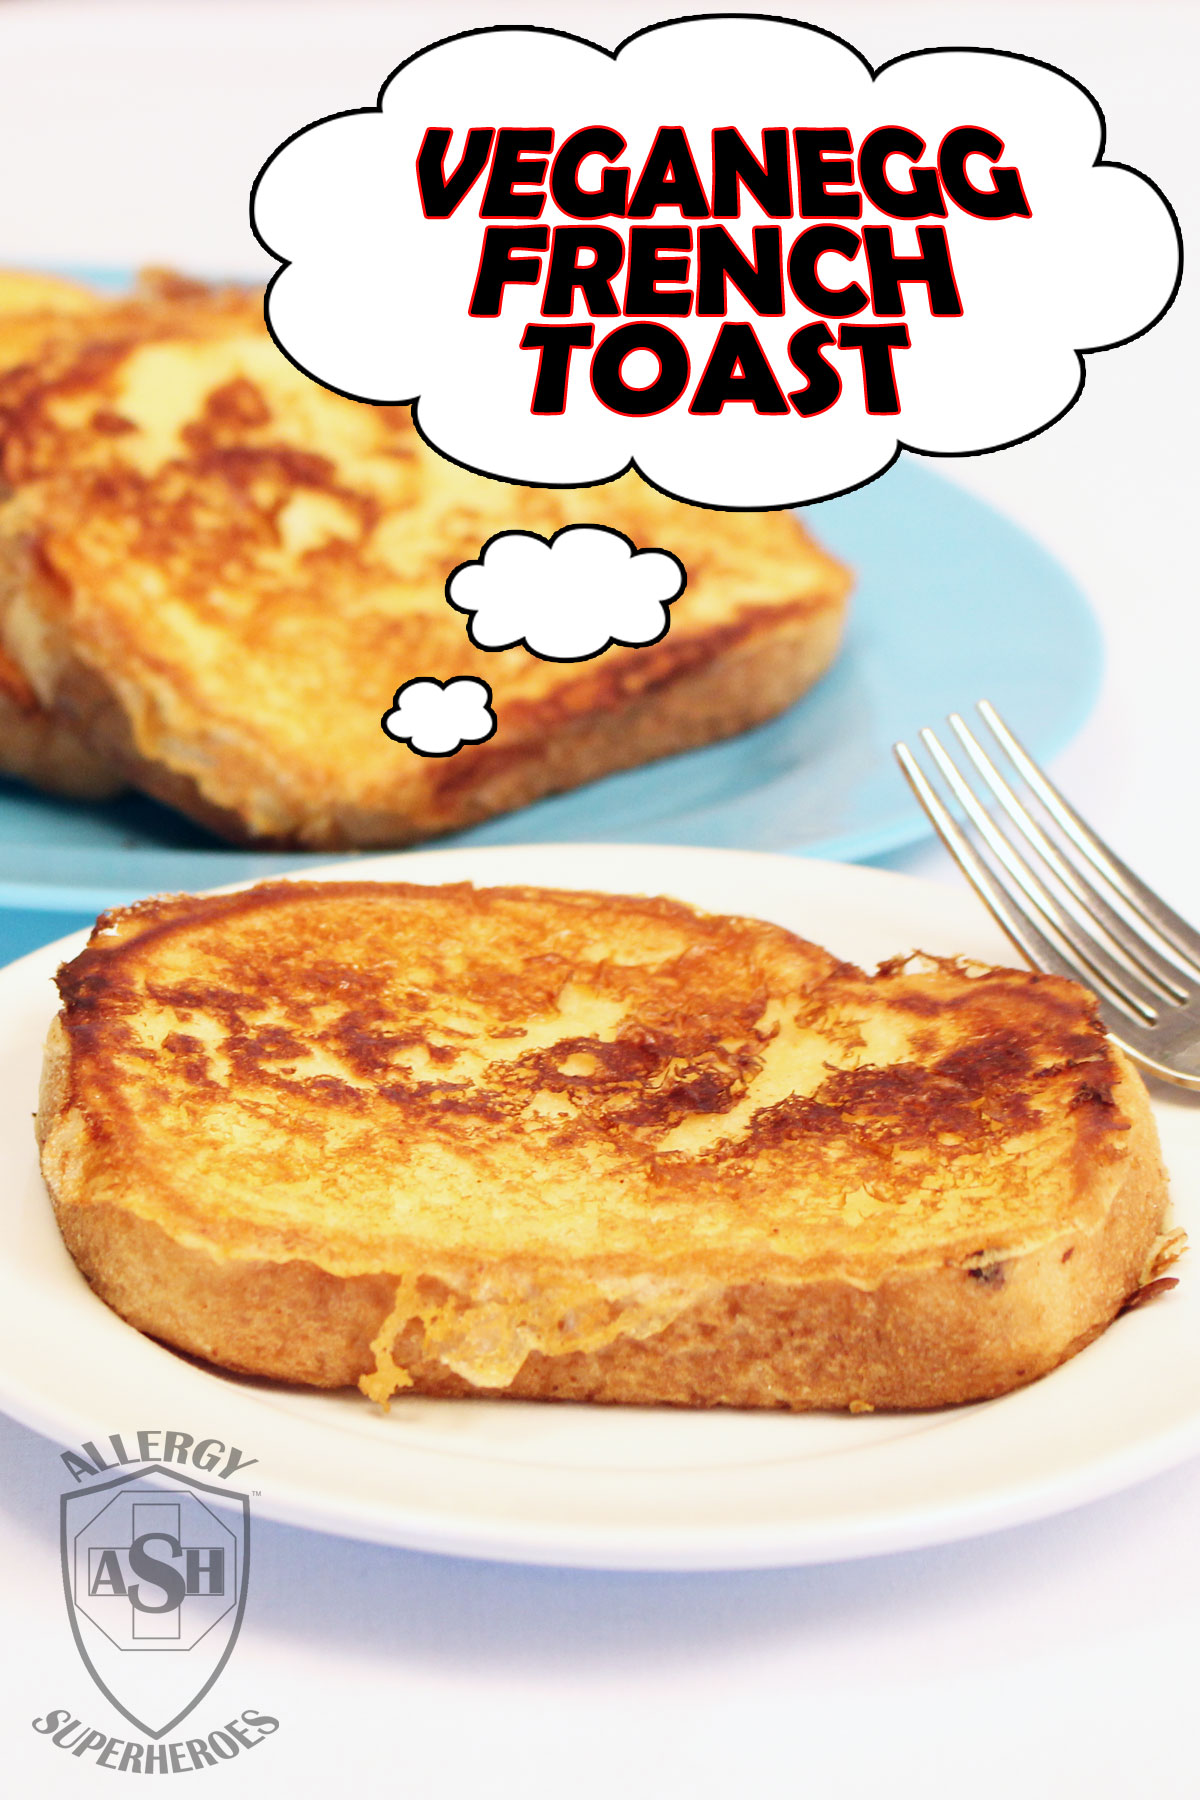 VeganEgg-French-Toast-recipe-Food-Allergy-Superheroes-Egg Free